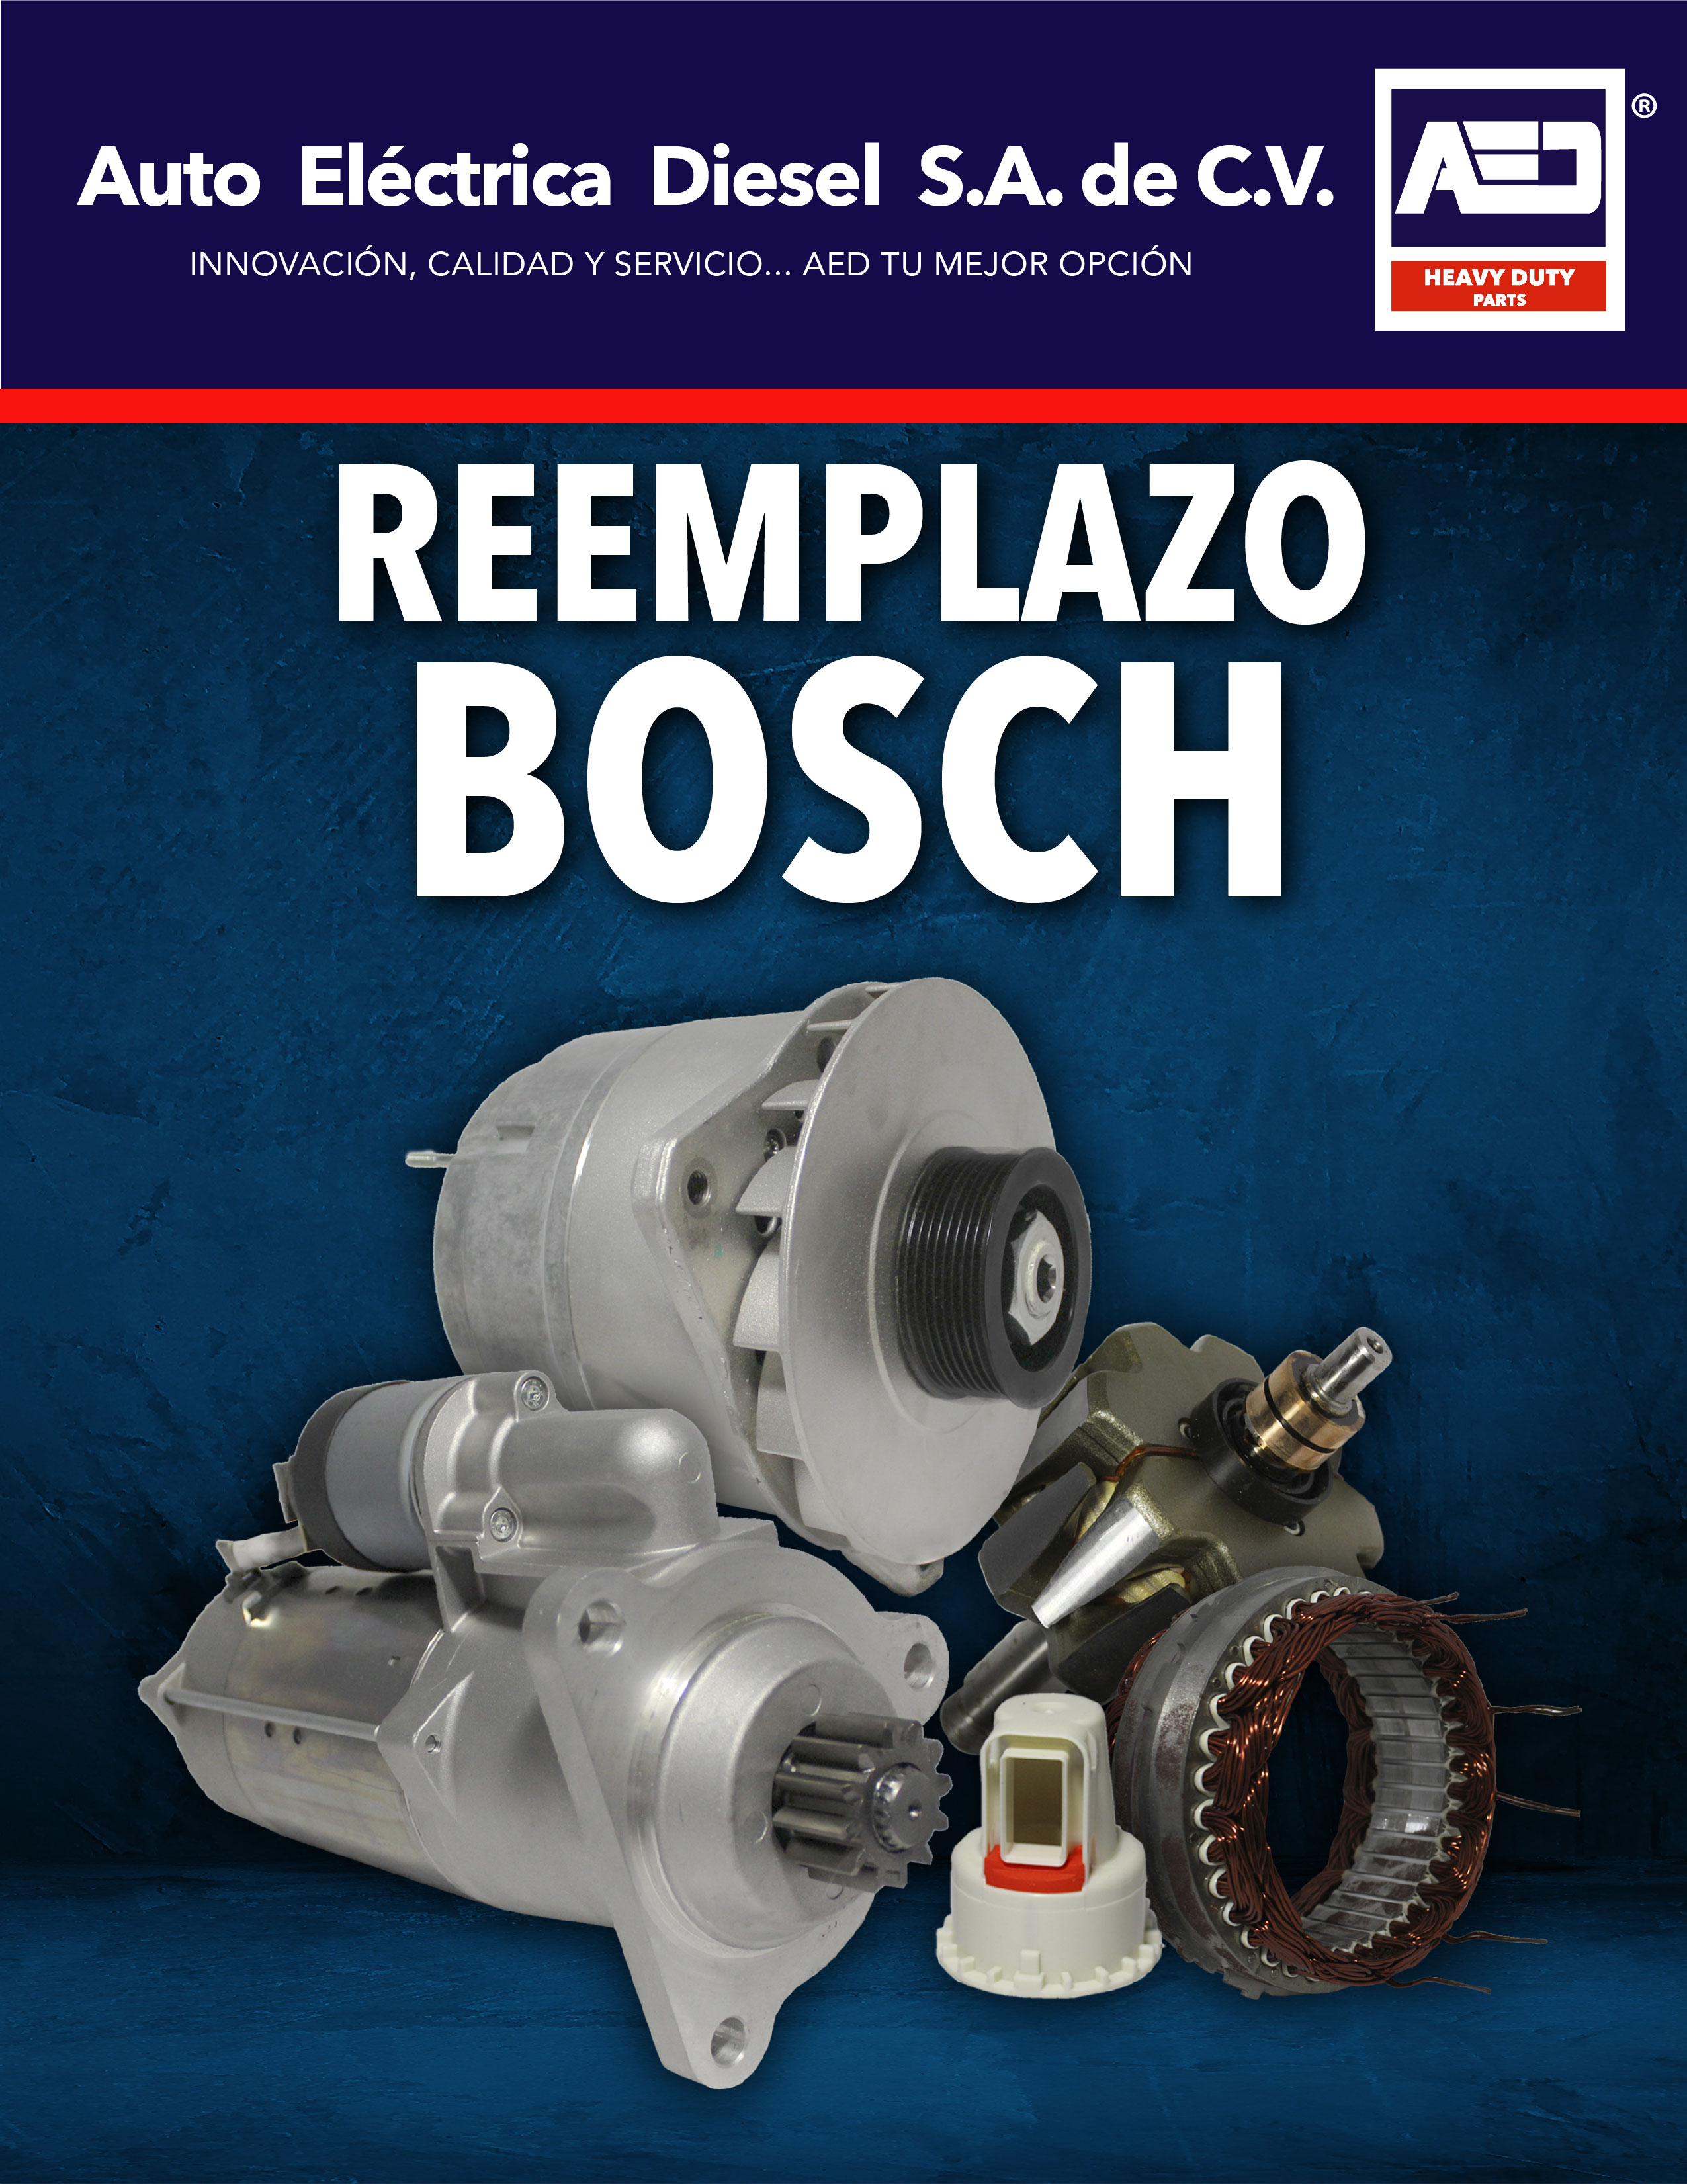 Reemplazo Bosch